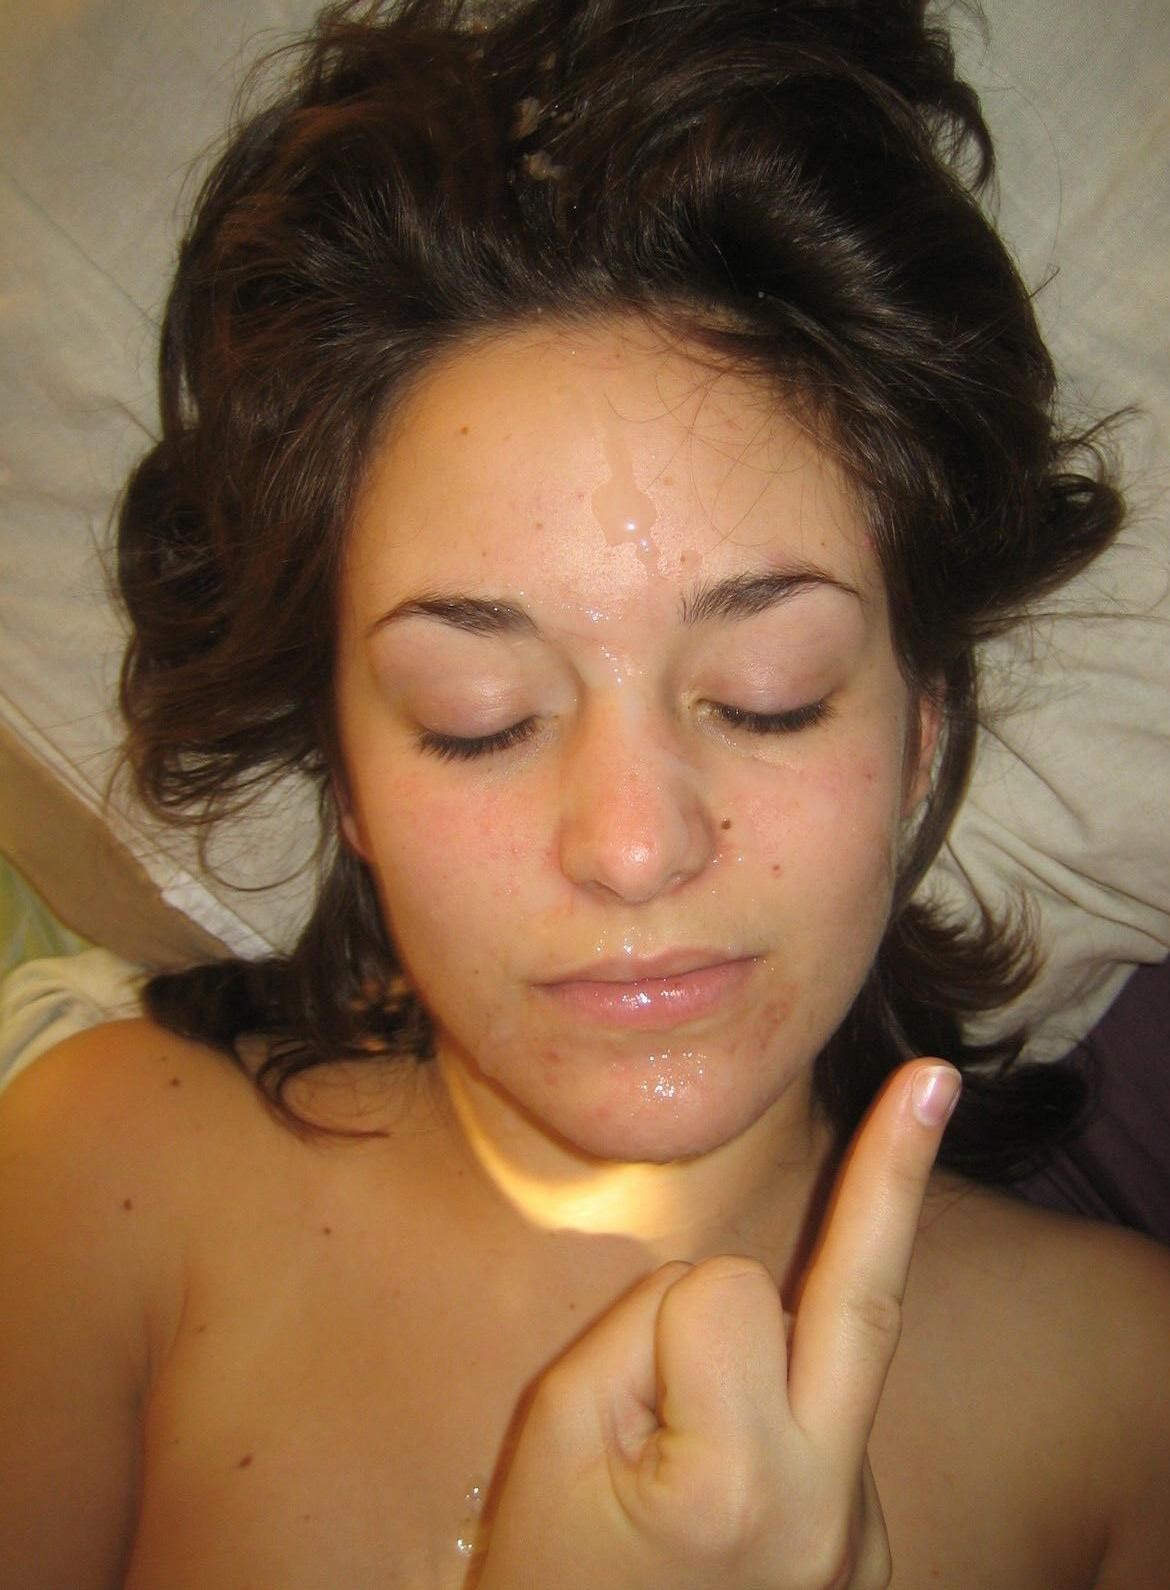 Middle finger facial cumshot (36 pictures) image